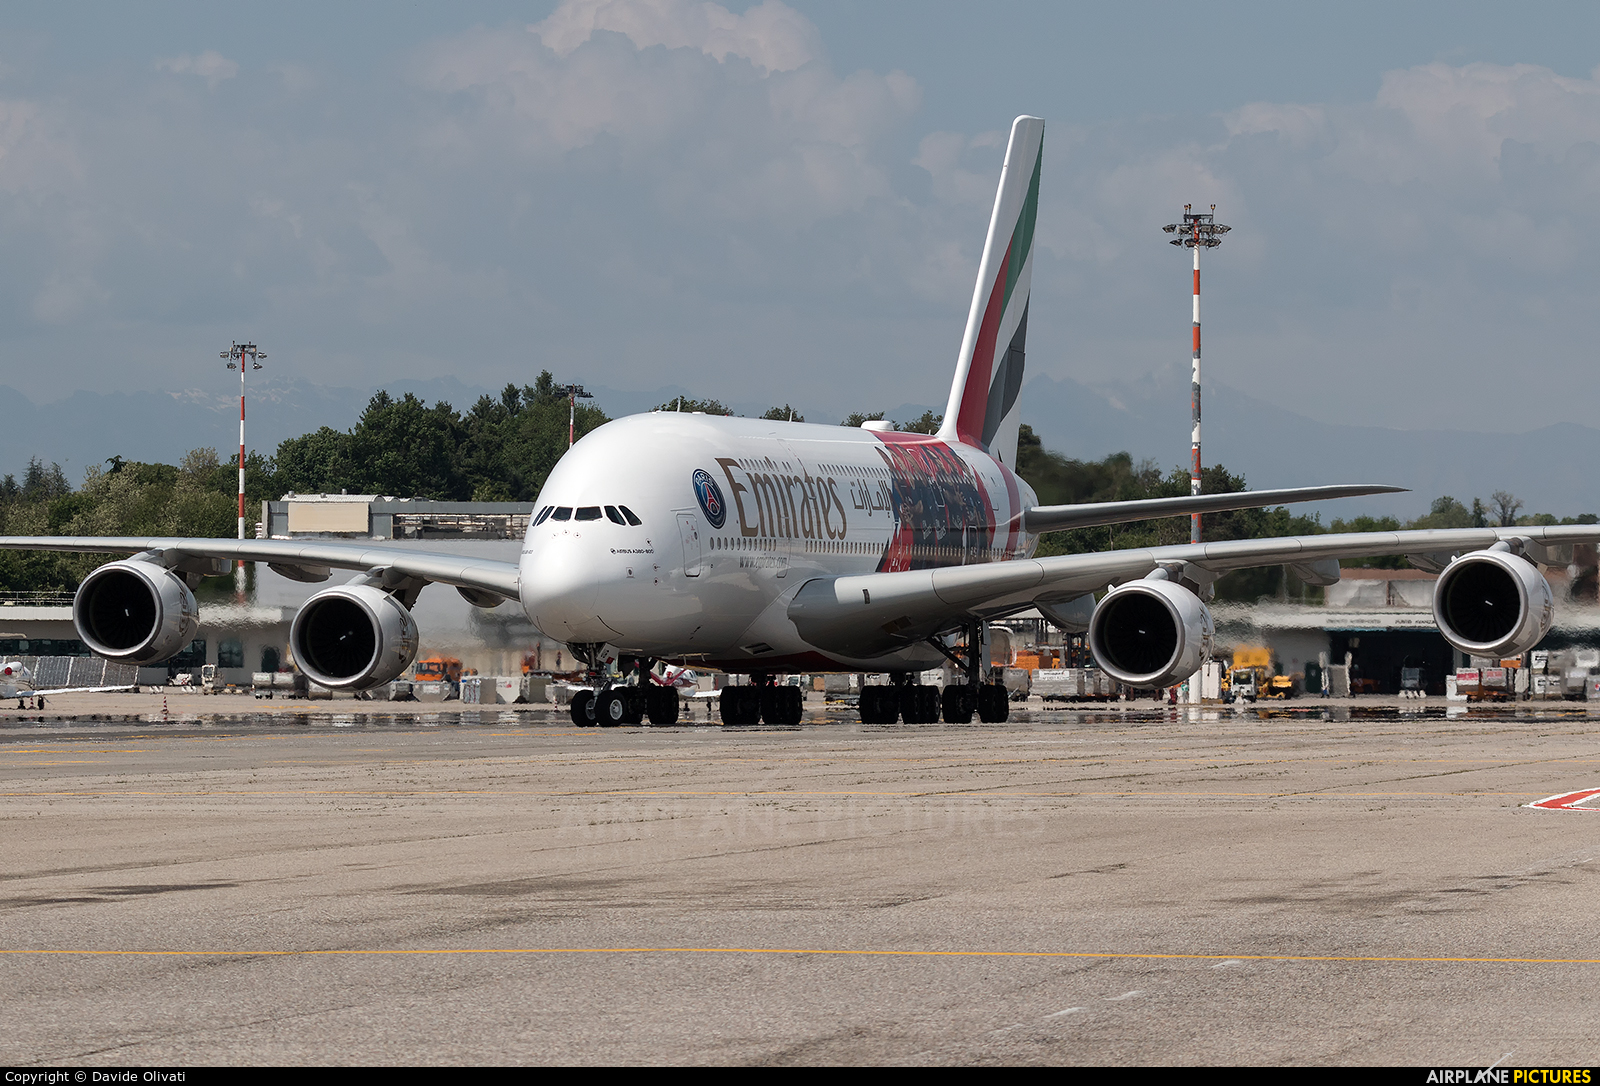 Emirates Airlines A6-EUB aircraft at Milan - Malpensa